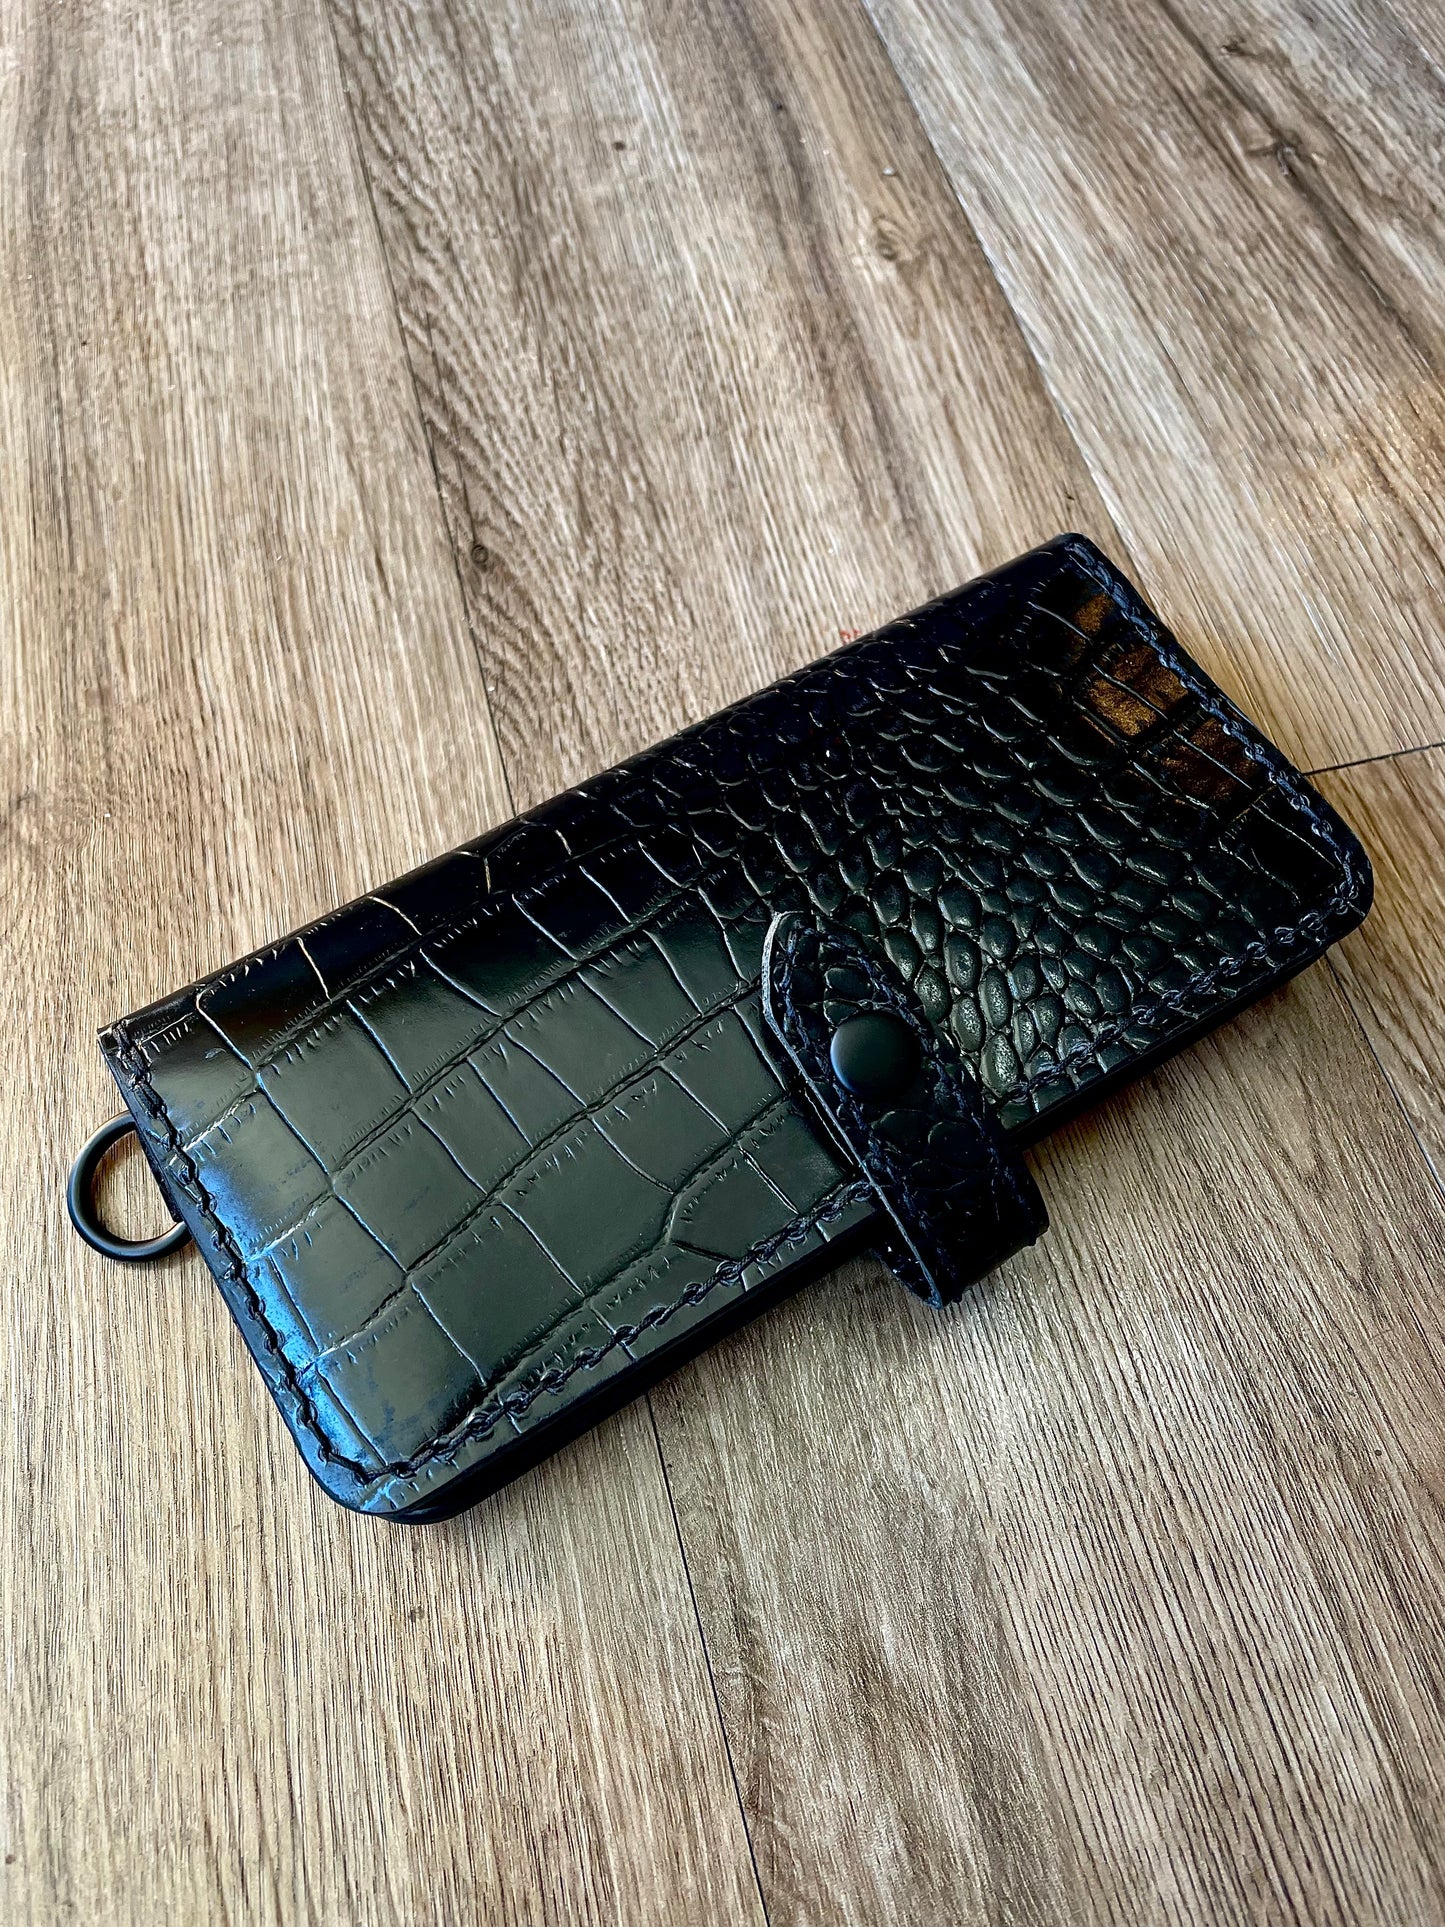 Black Gator Clutch Wallet